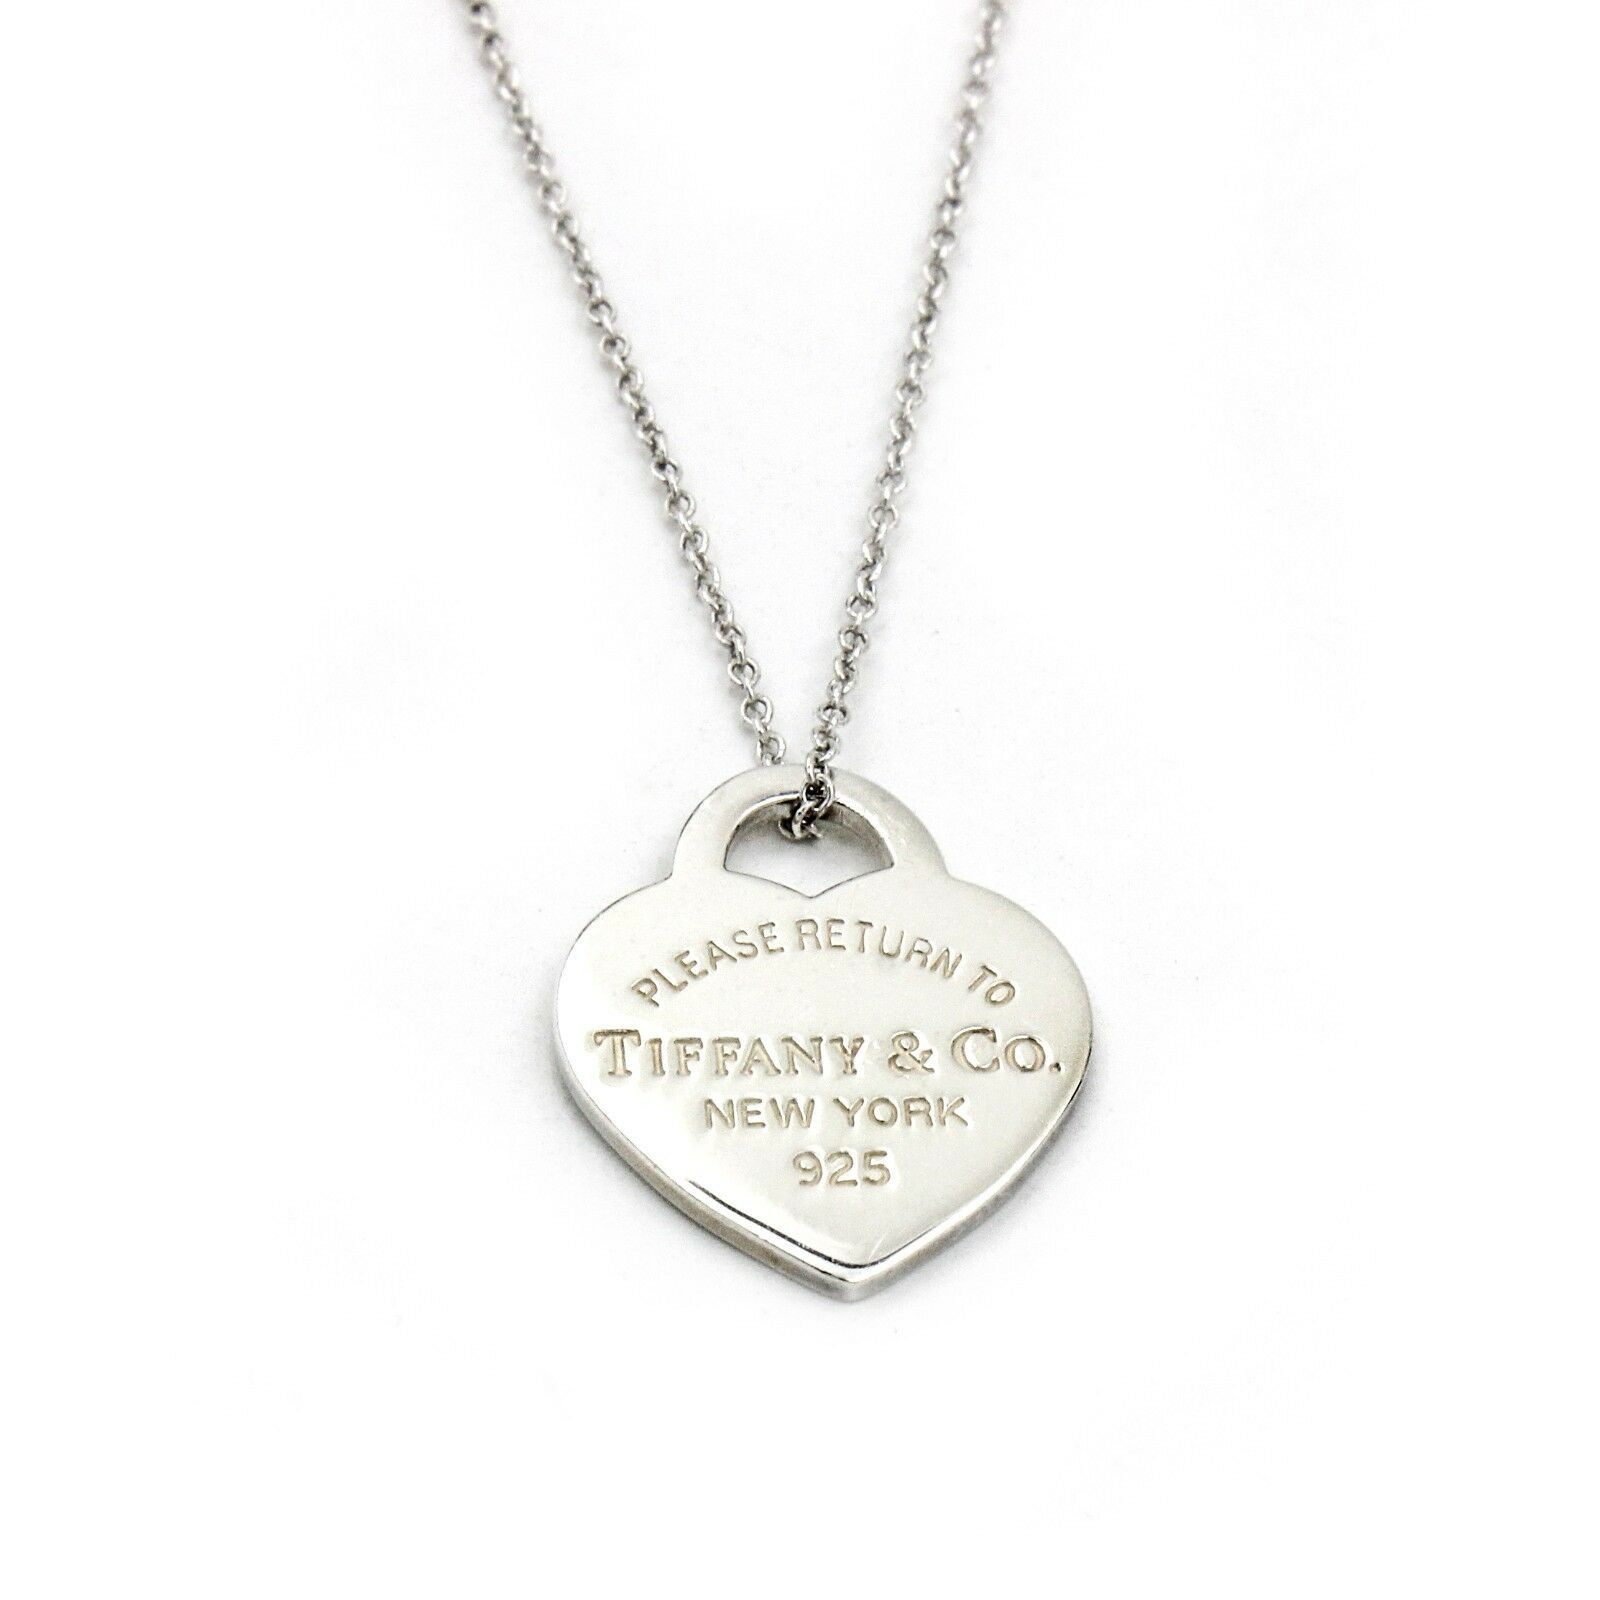 Tiffany Necklace Heart
 Return to Tiffany & Co Small Heart Pendant Necklace